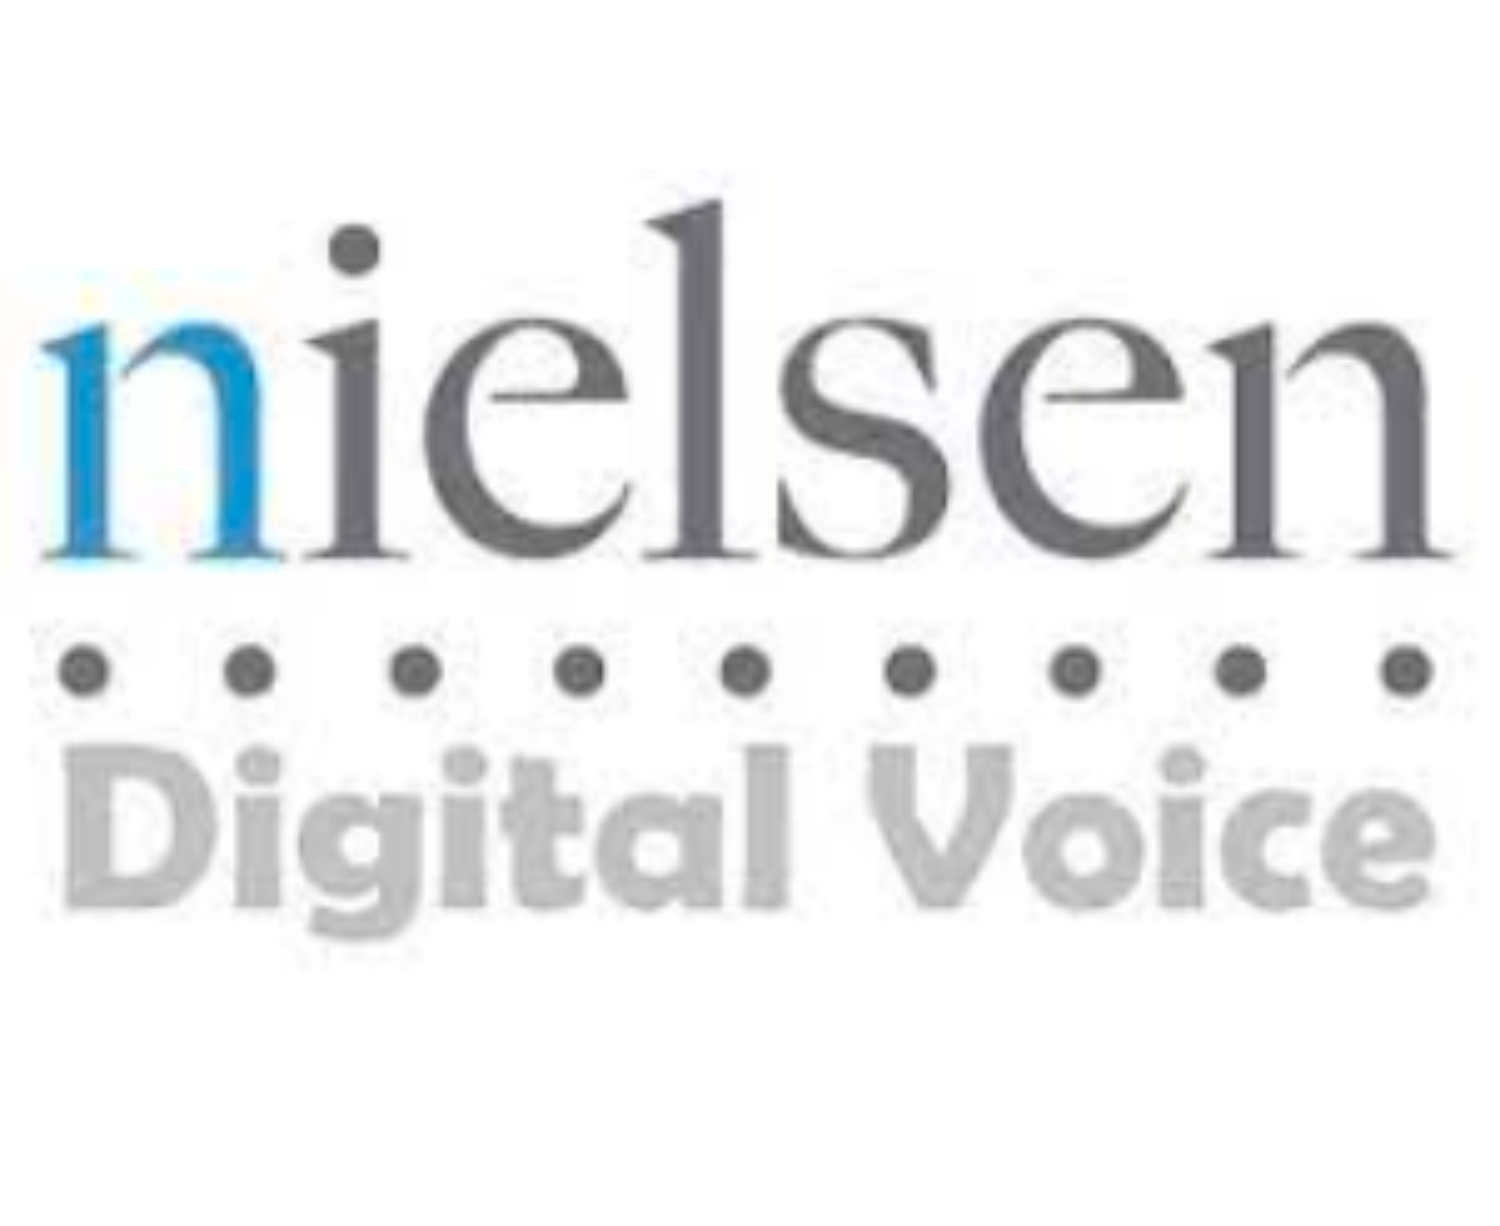 nielson digital voice